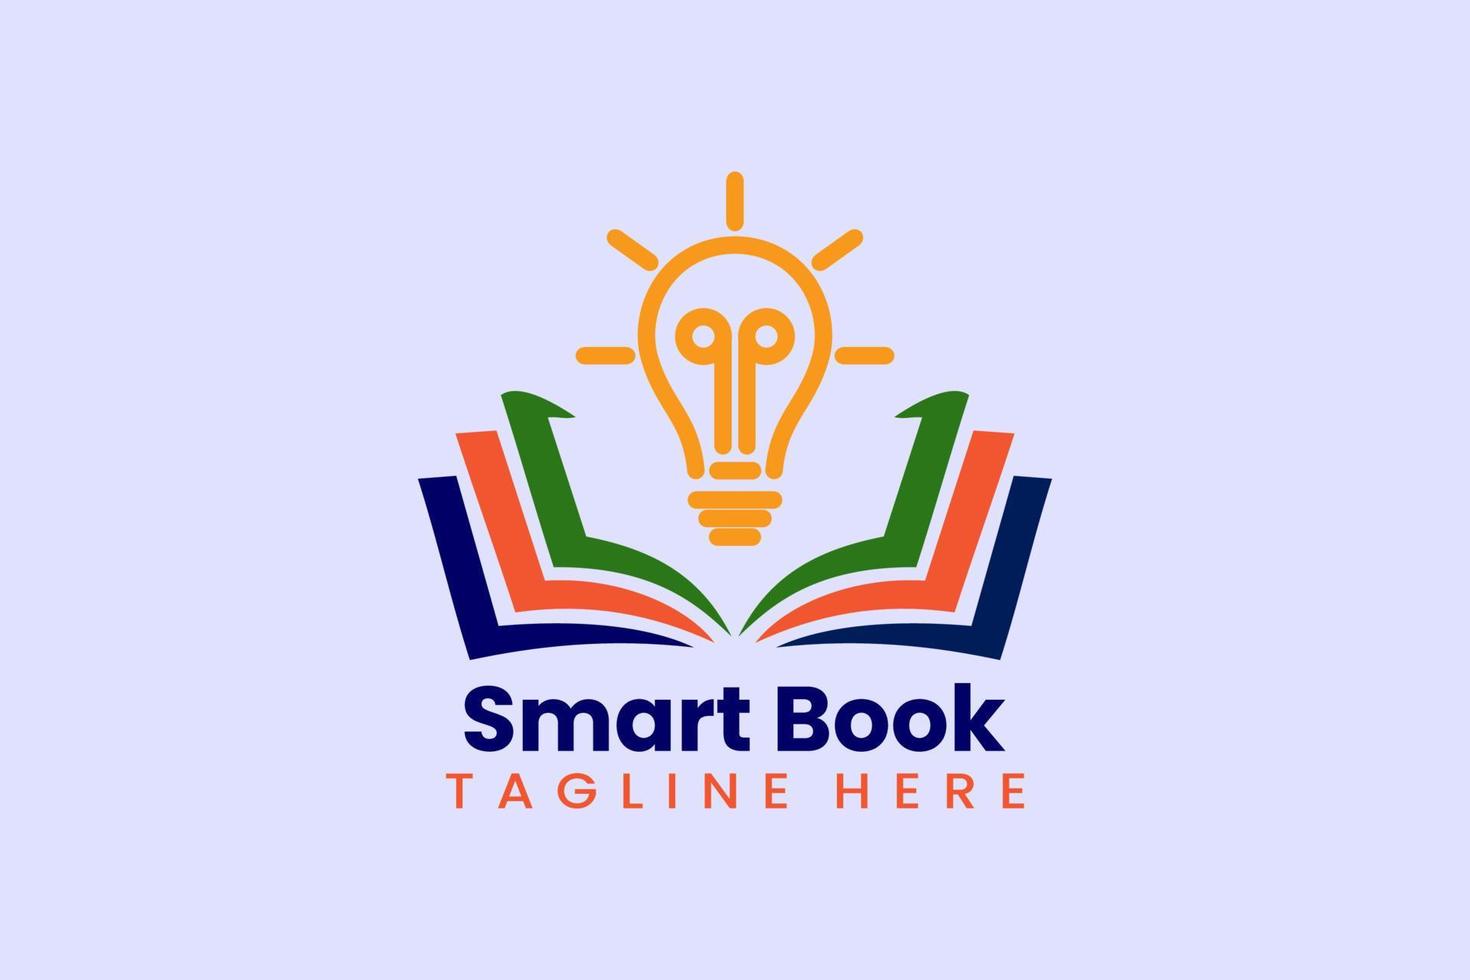 plano inteligente livro logotipo modelo vetor ilustração